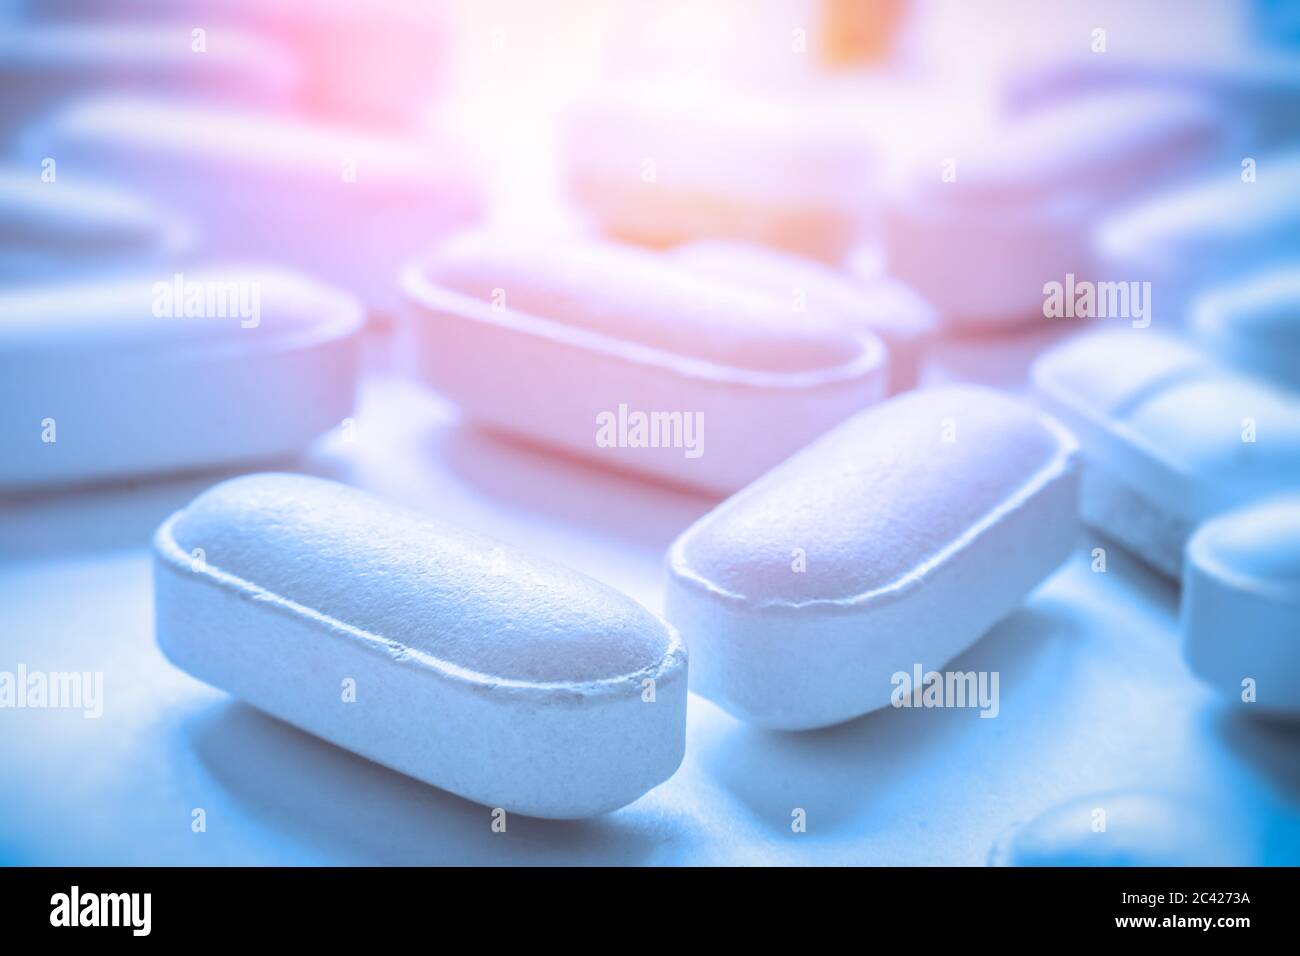 Weiße Tabletten oder Pillen oder Medikamente oder Medikamente Nahaufnahme. Selektiver Fokus. Apotheke, Medizin, medizinische Behandlung Konzept. Stockfoto